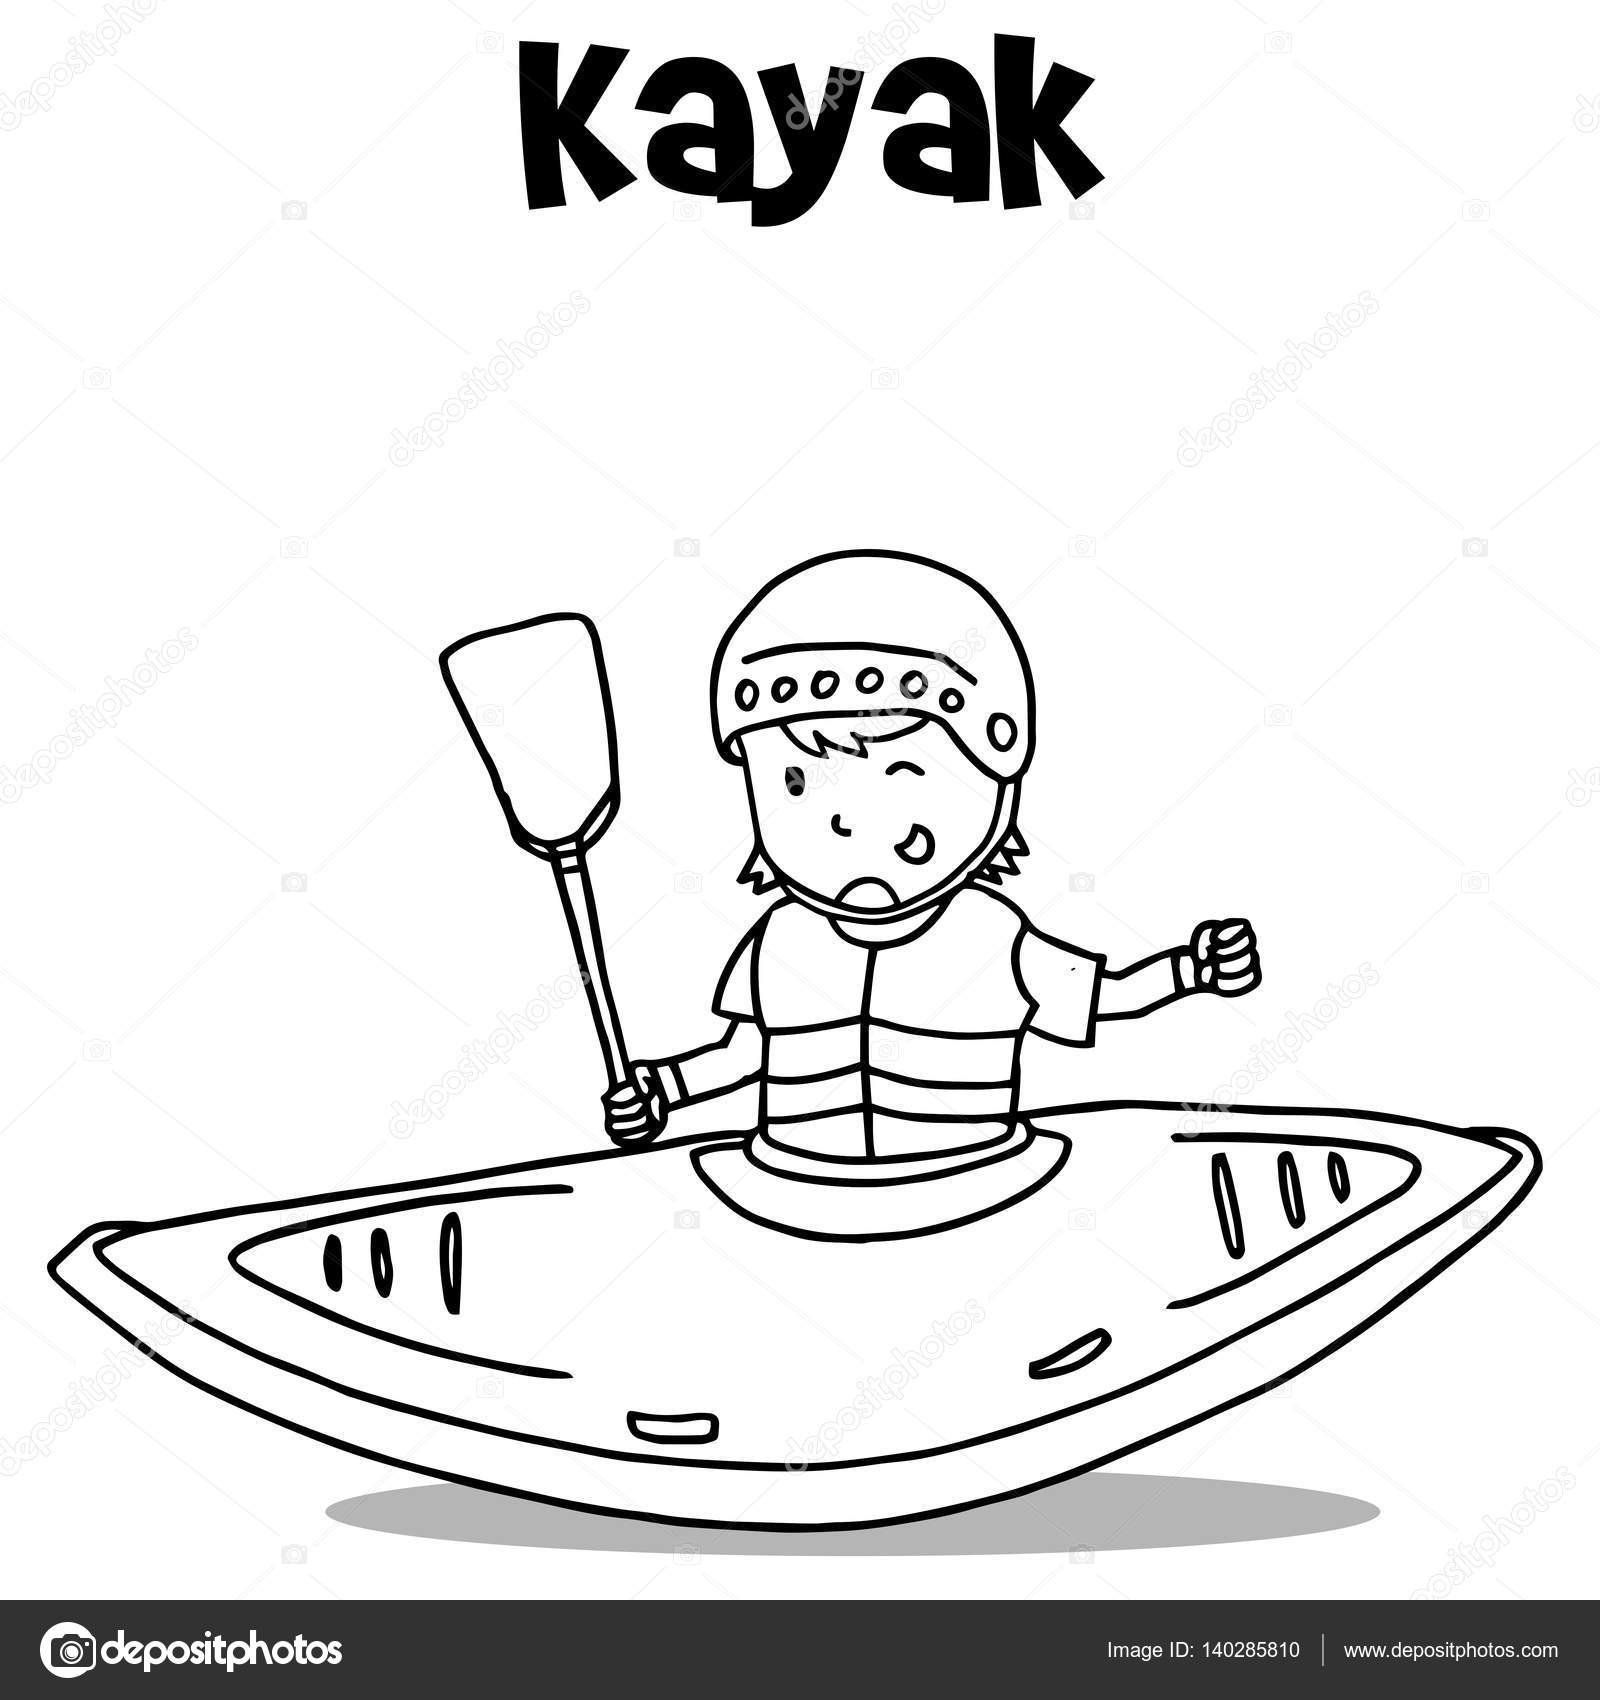 Kayak Drawing at GetDrawings | Free download